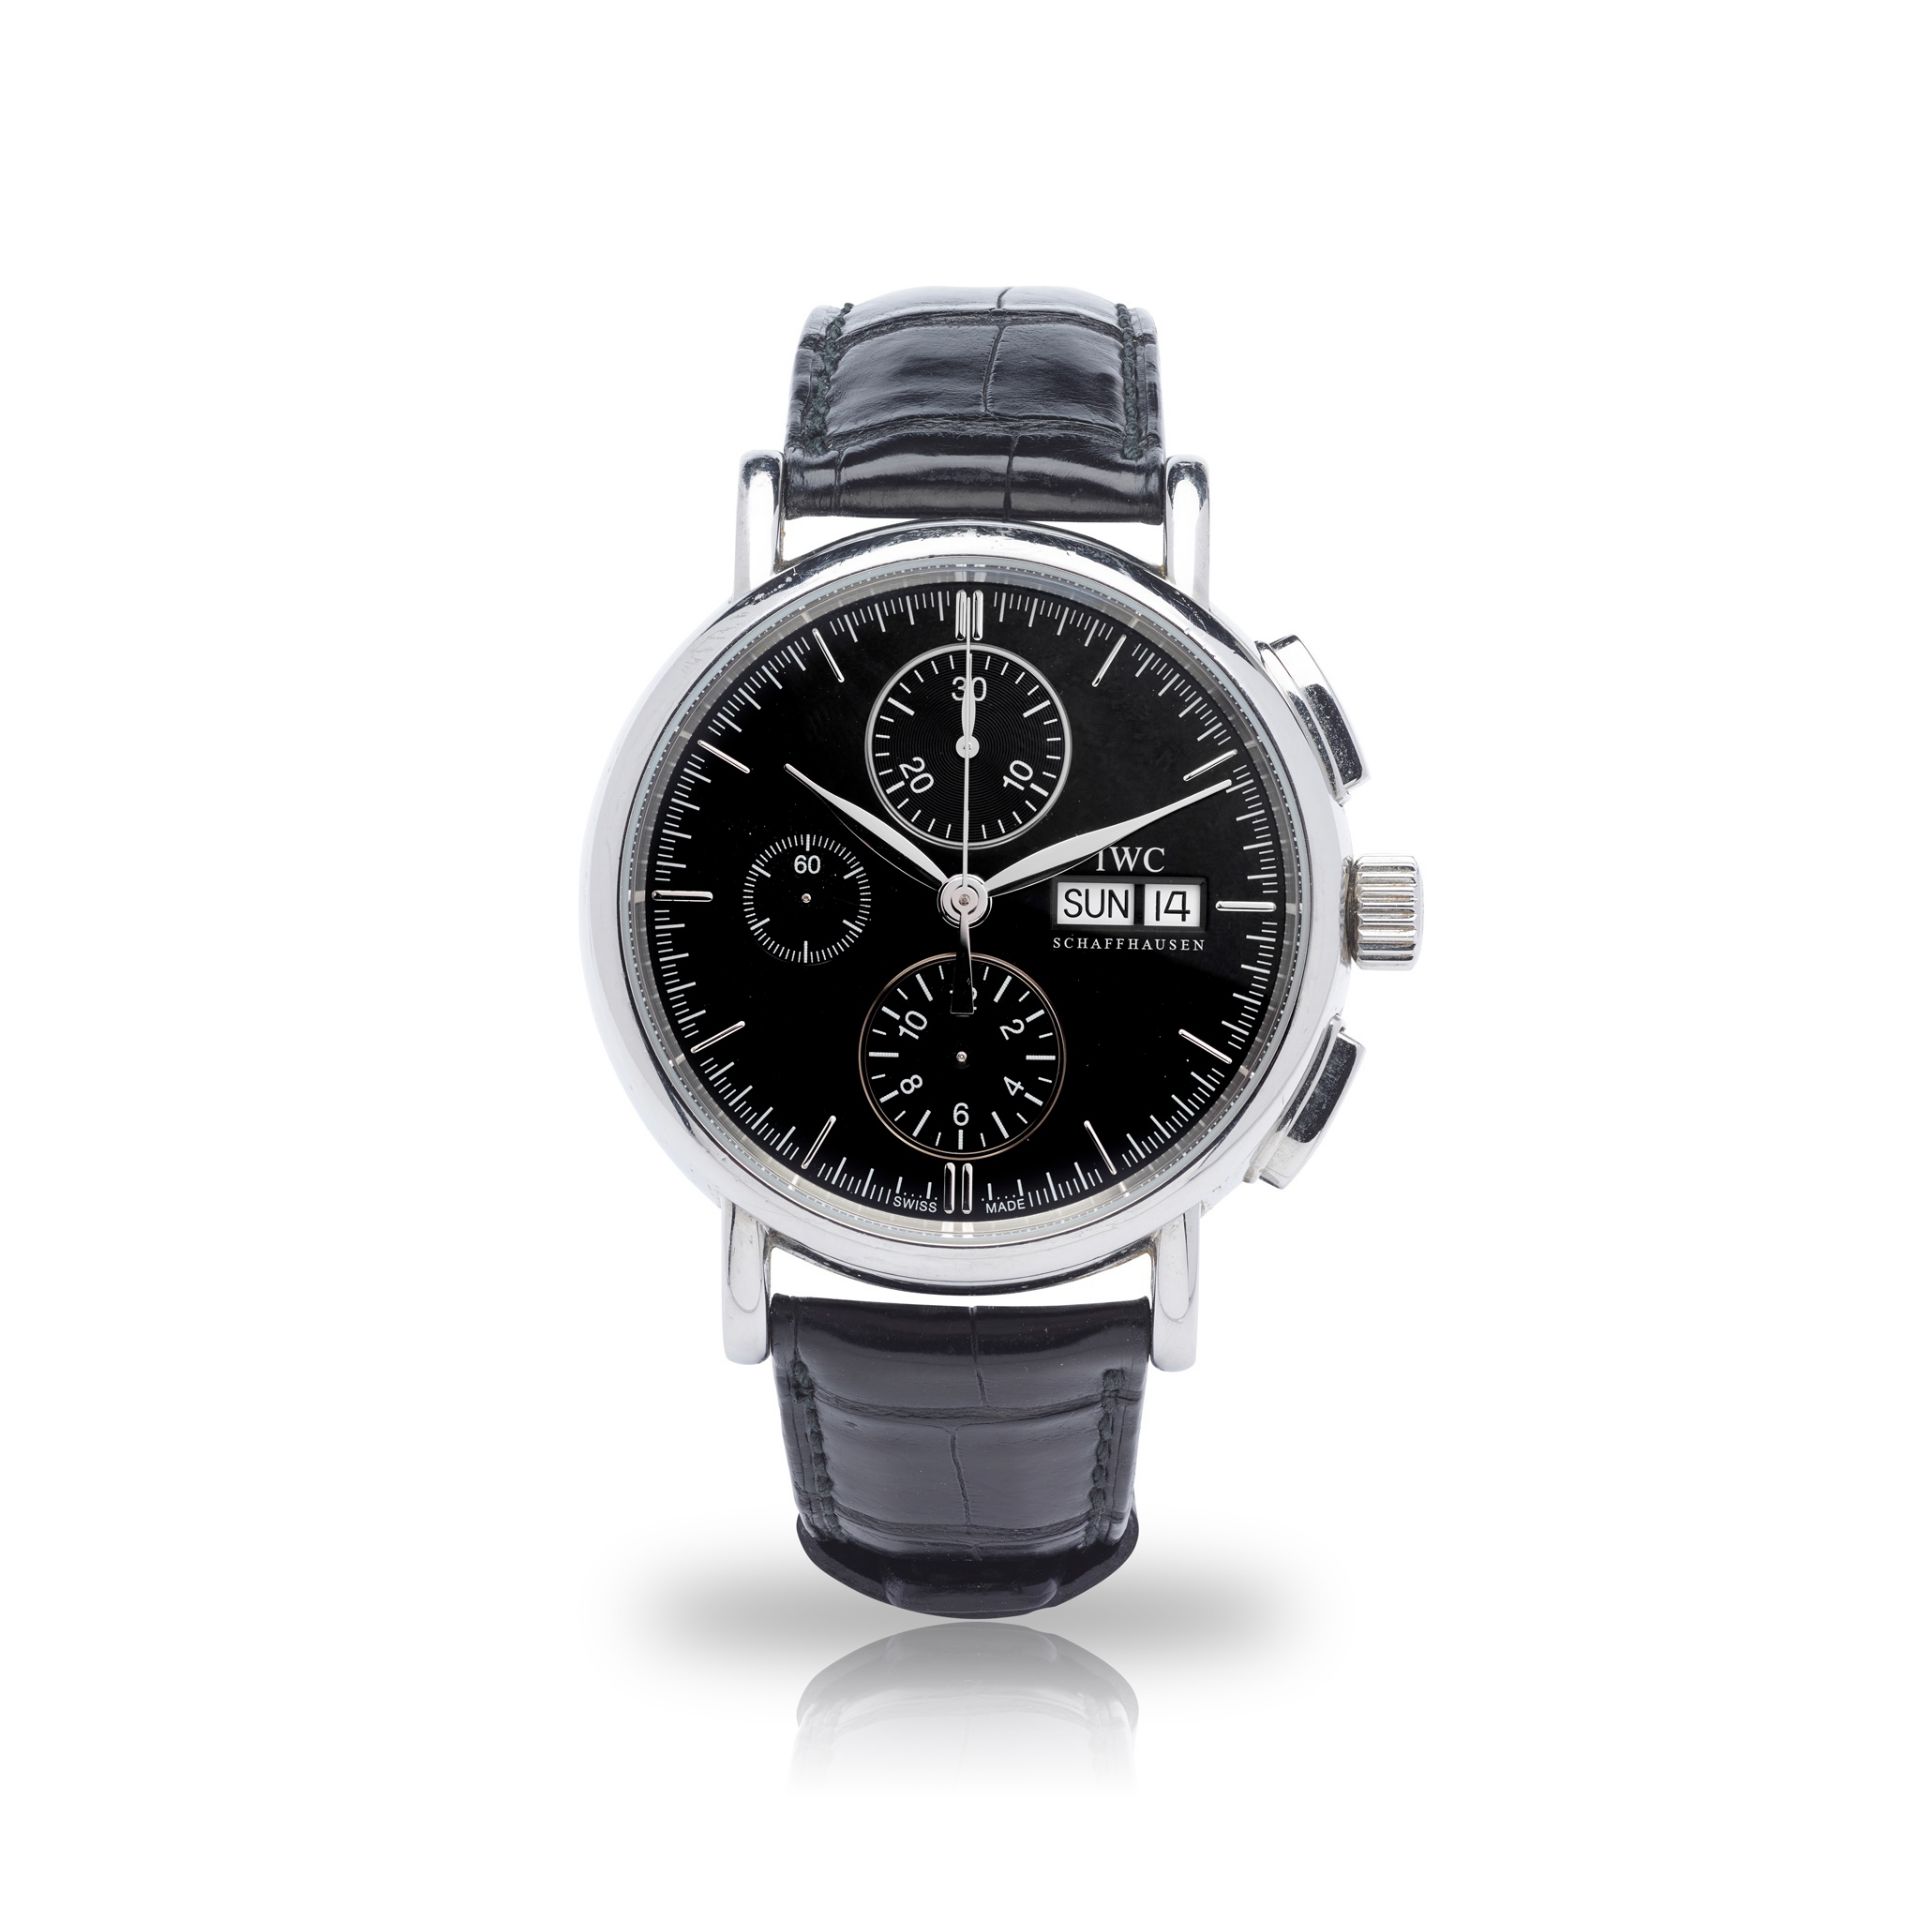 IWC: a chronograph wrist watch